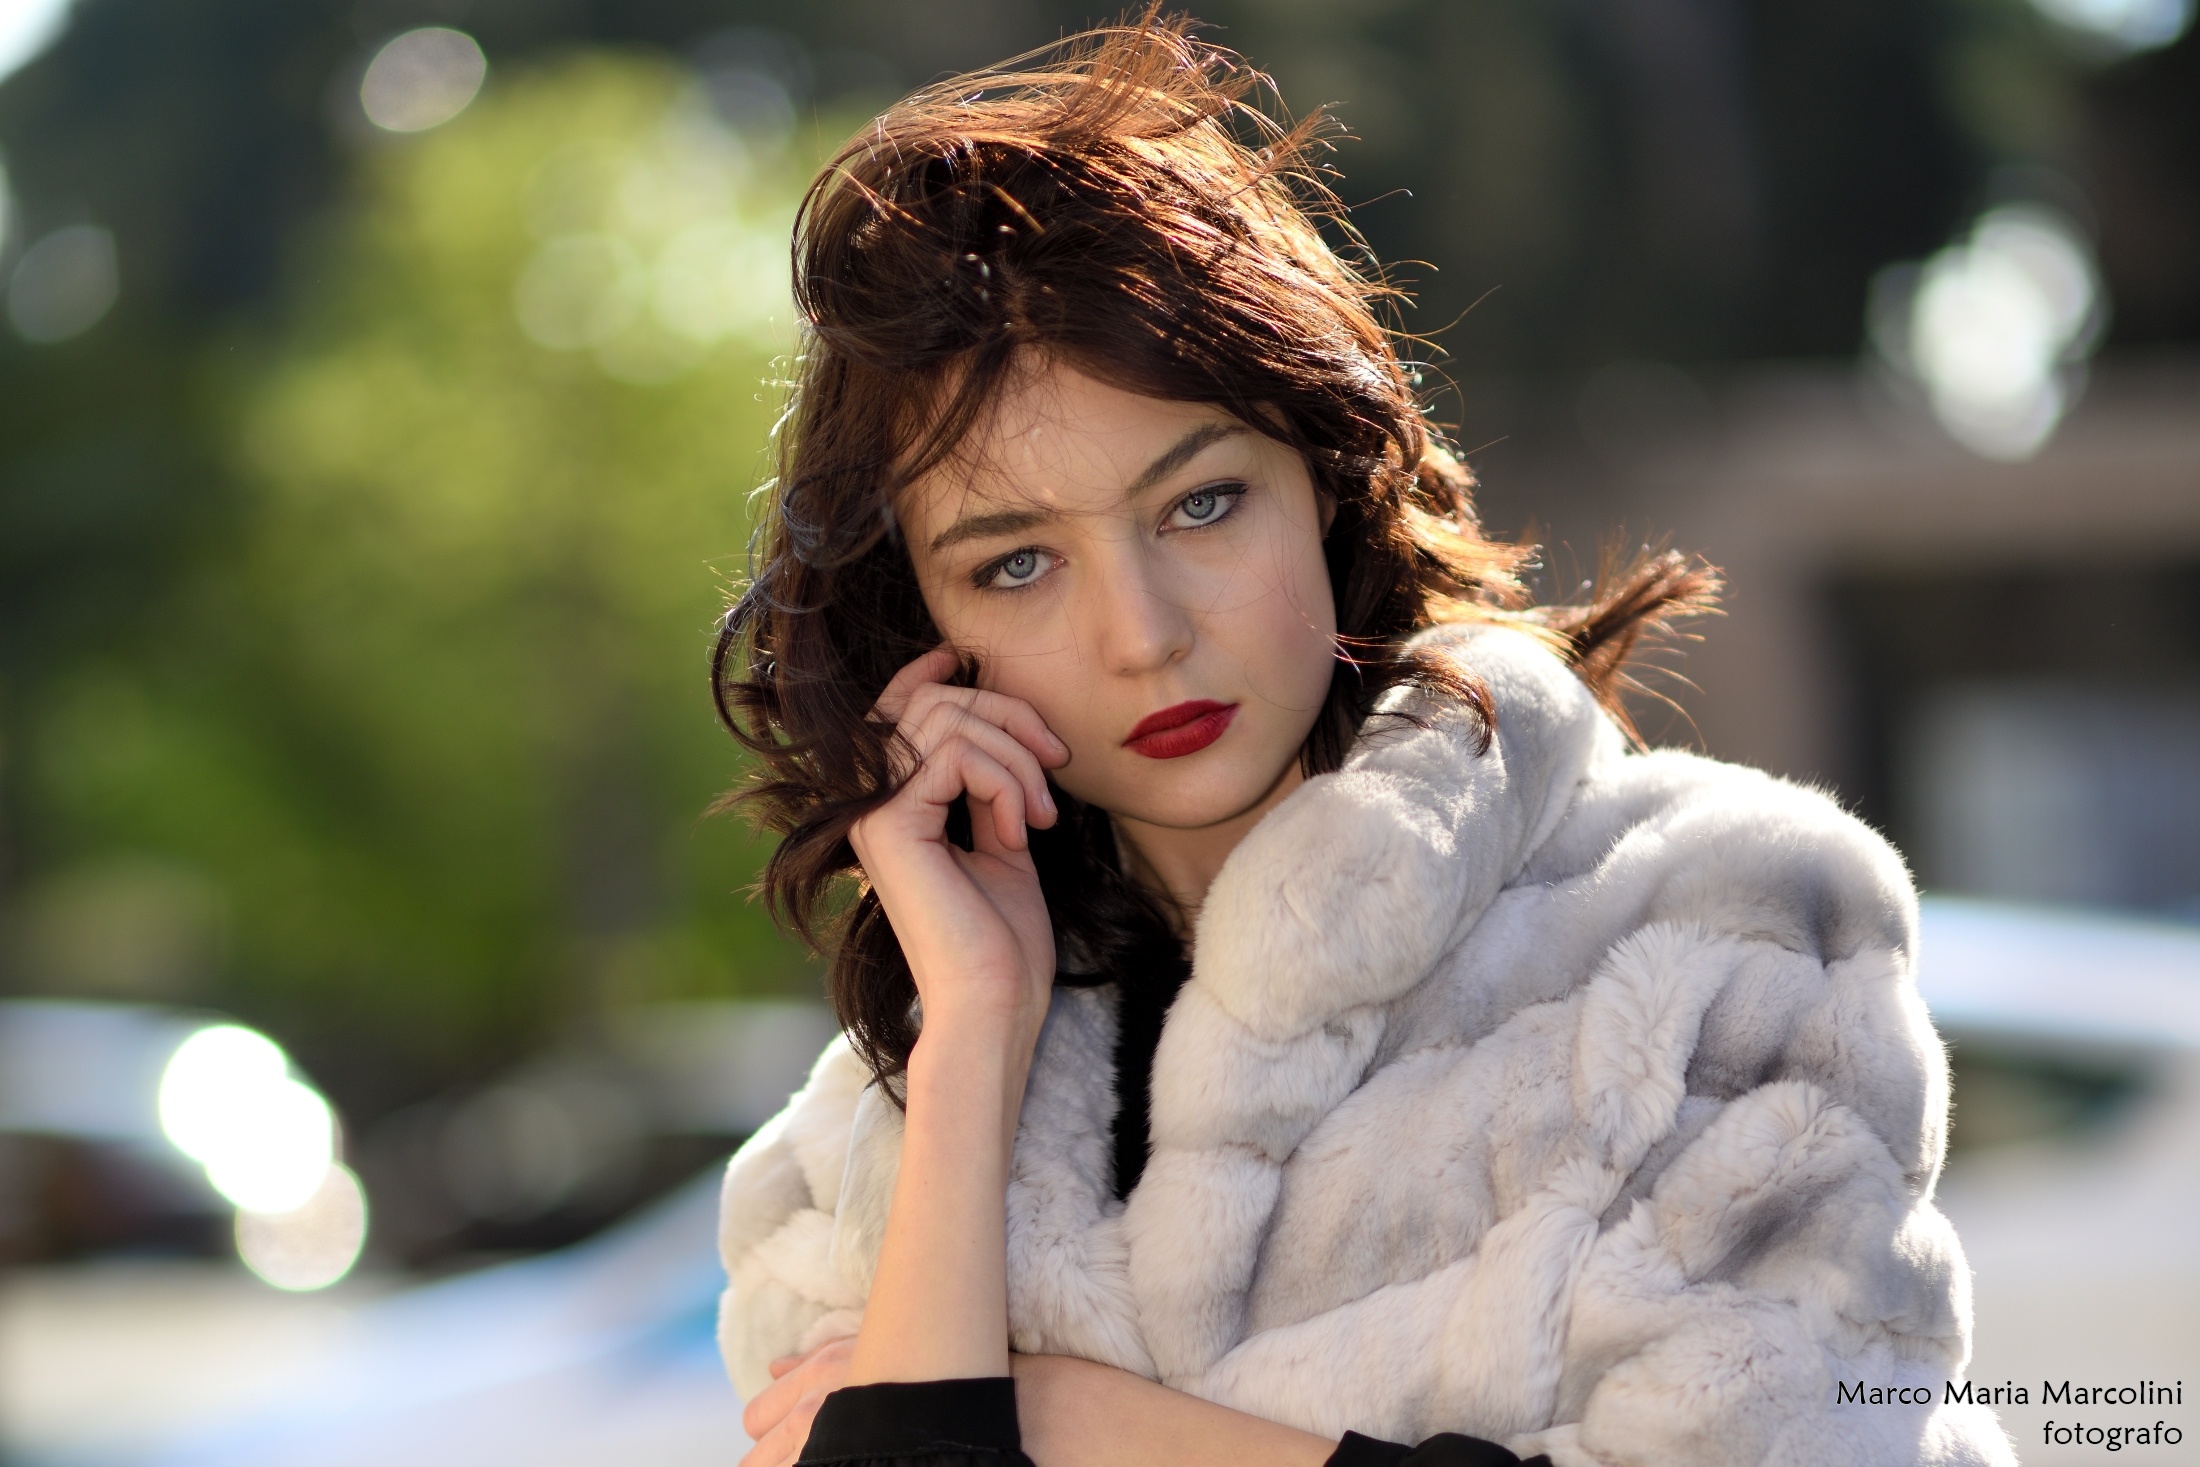 Model Red Lipstick Face Hand On Face Gray Eyes Sunlight Women Outdoors Women Brunette Portrait Fur C 2200x1467